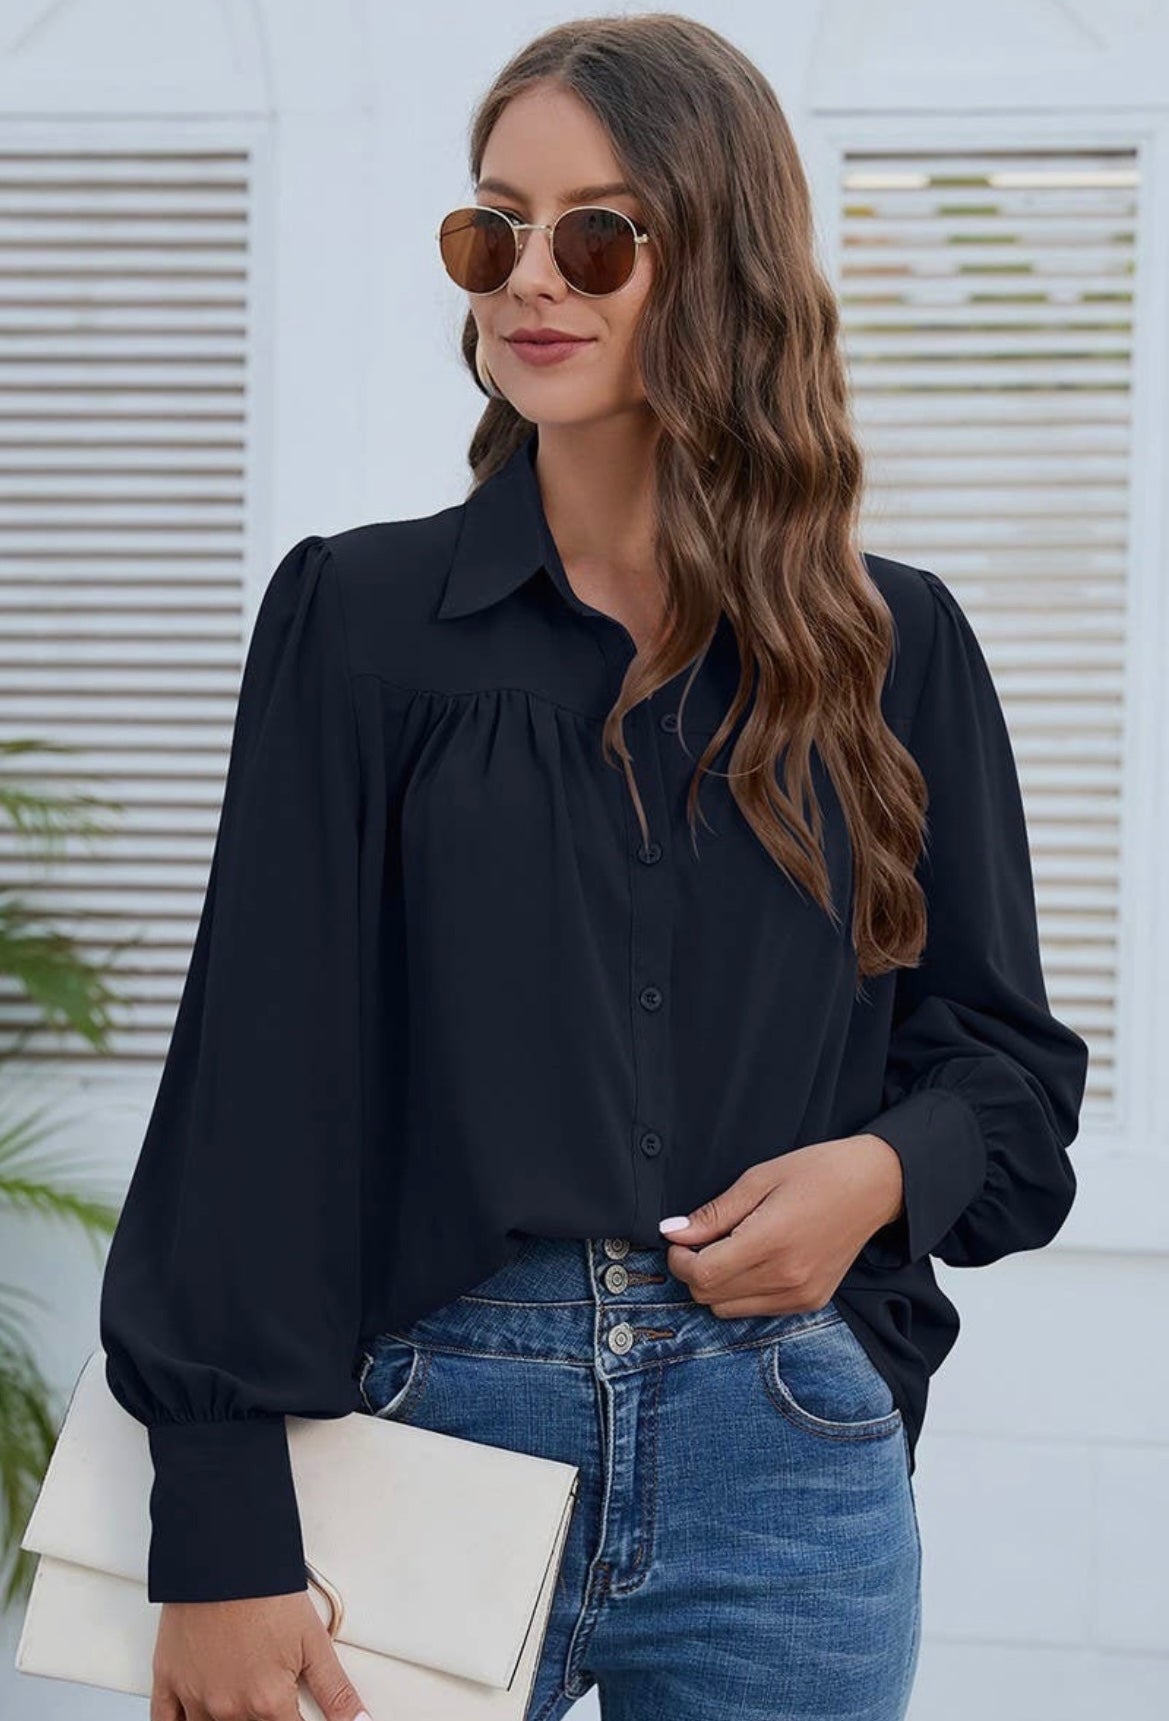 Basic black blouse